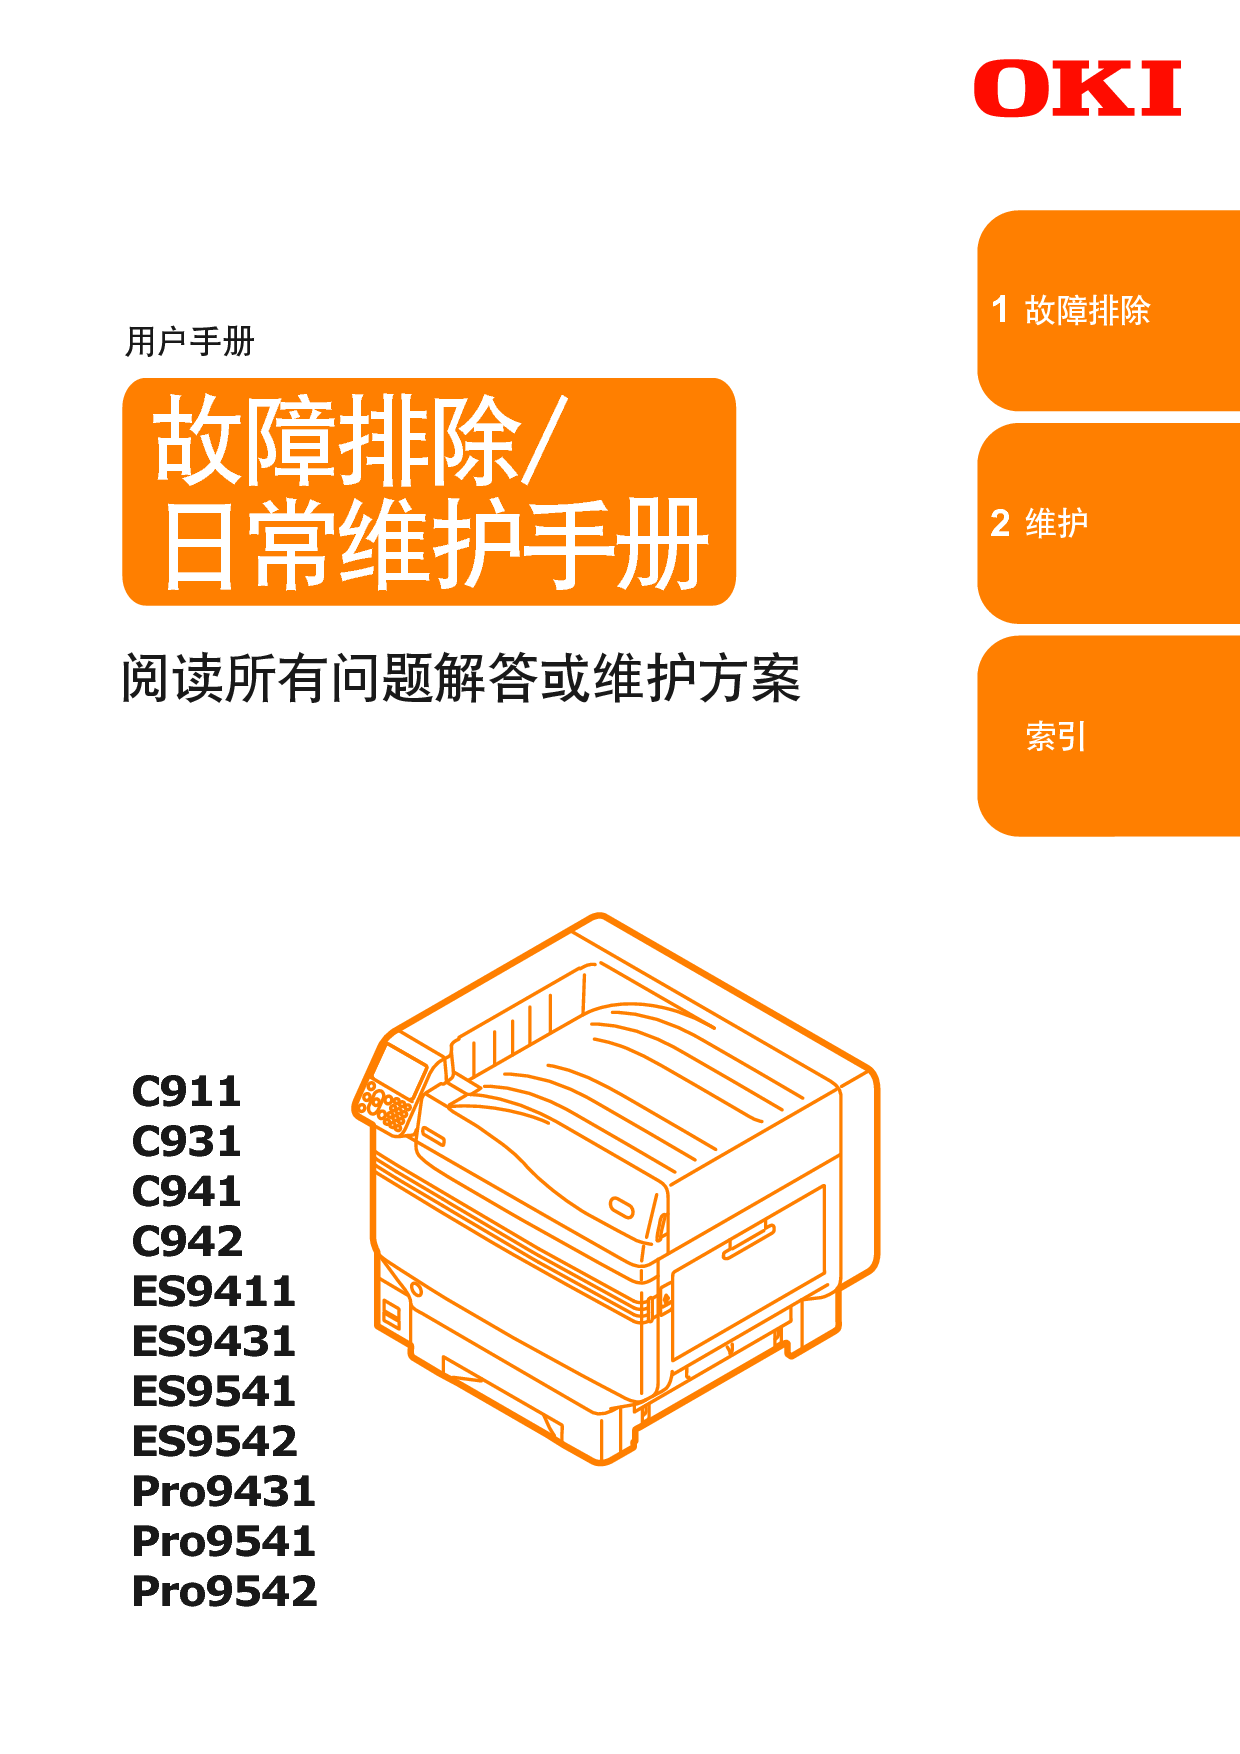 OKI C911dn, C931, C942, ES9411, Pro9431 故障排除与日常维护 用户手册 封面